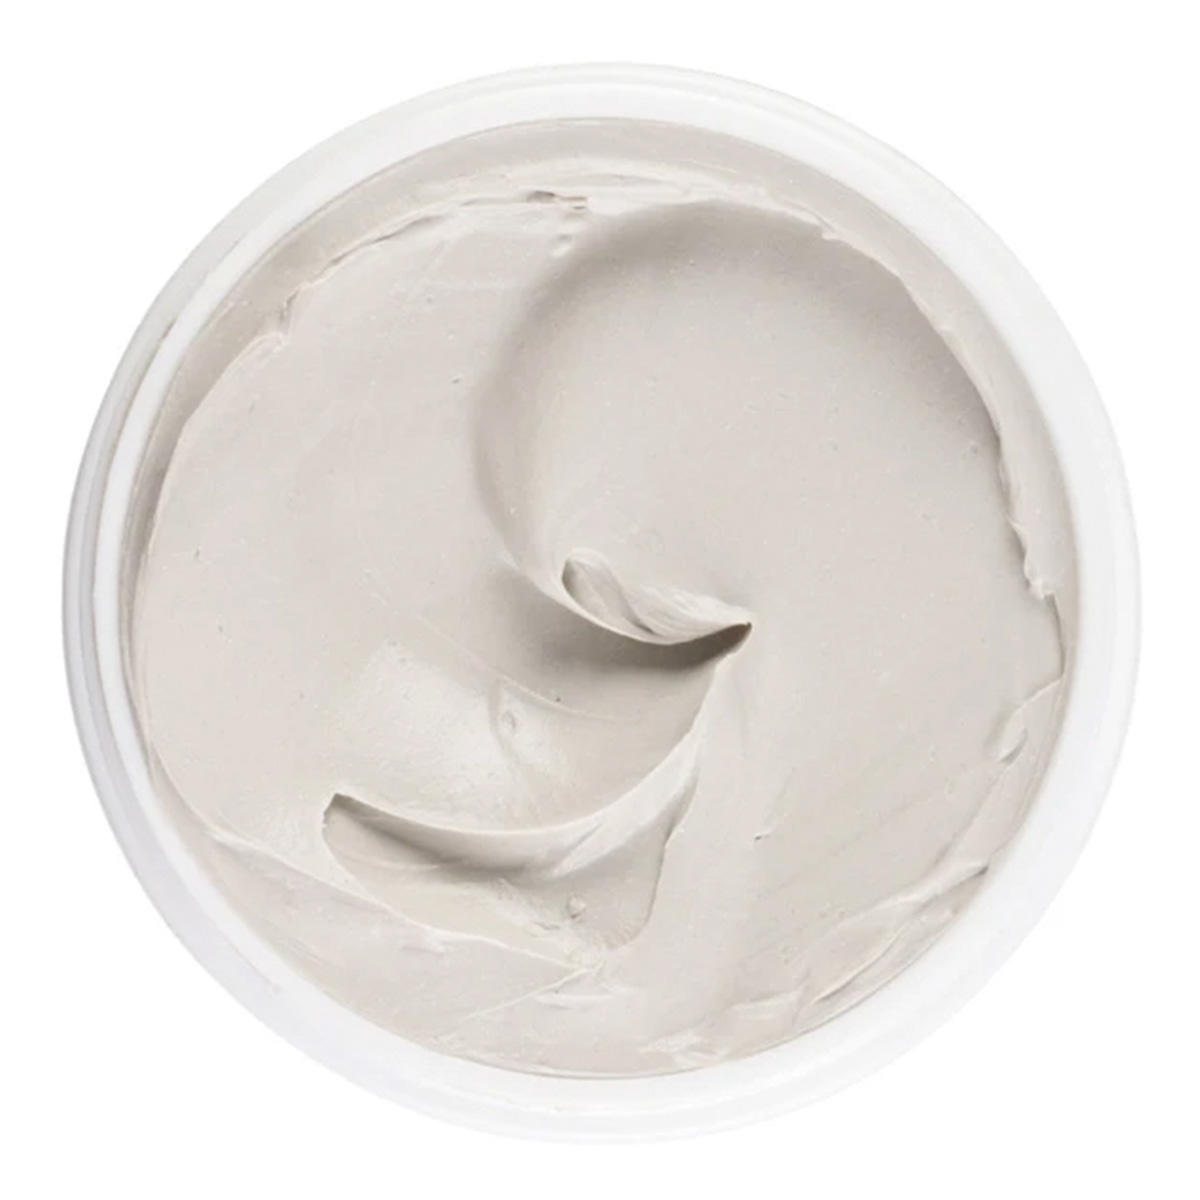 Kiehl's Rare Earth Pore Cleansing Masque  28 ml - 2